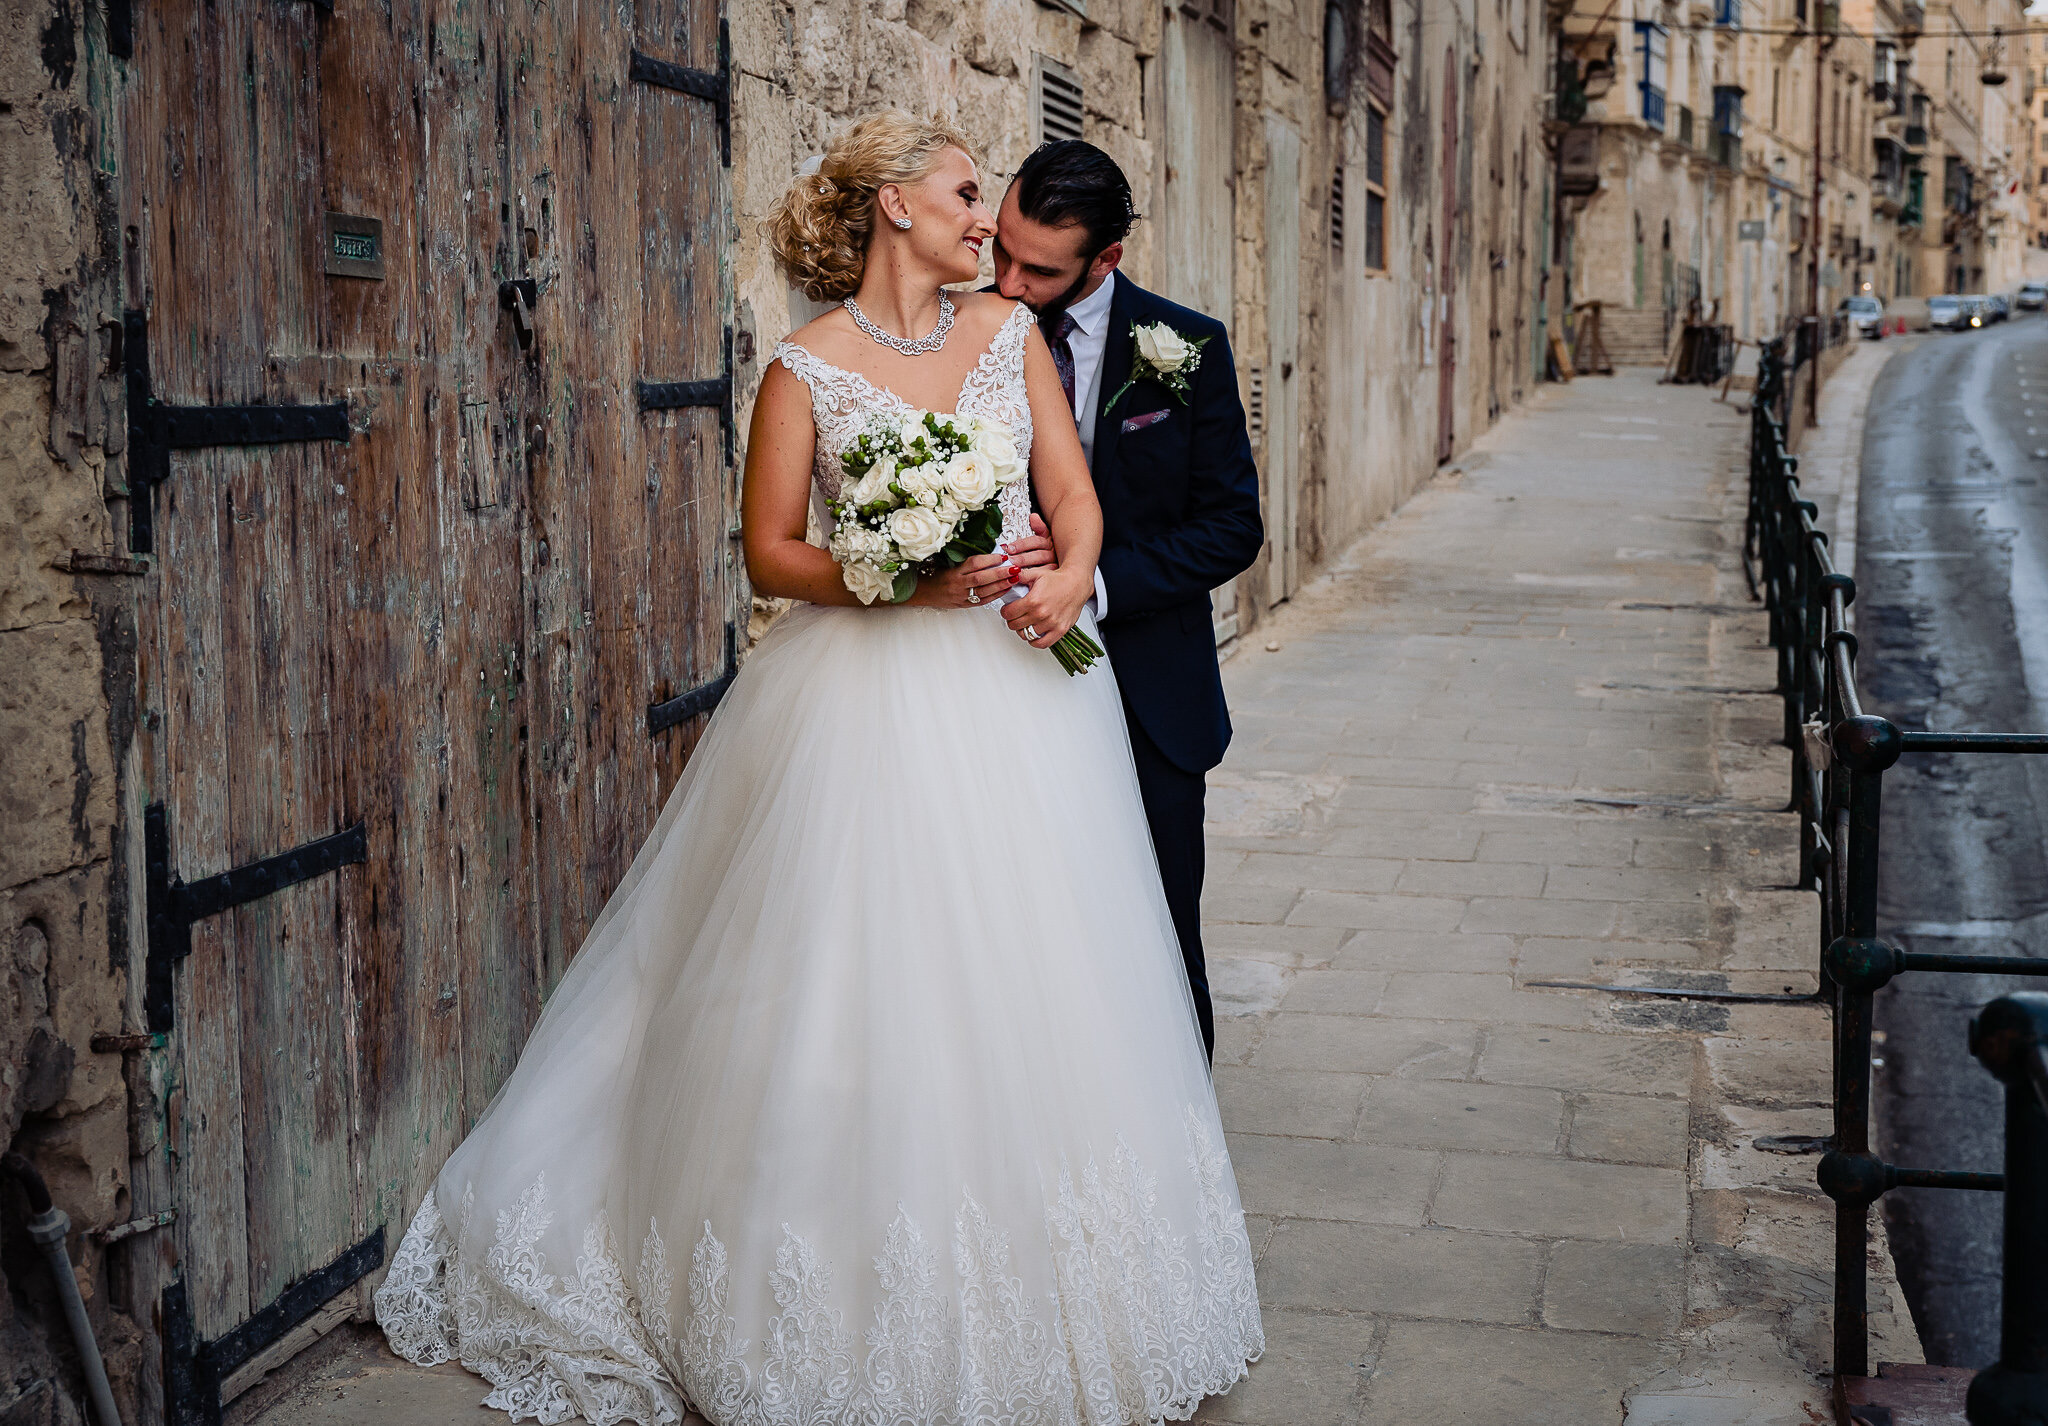 Wedding Photography Malta - Michela &amp; Fabio - Bride &amp; Groom Photo Shoot in Valletta